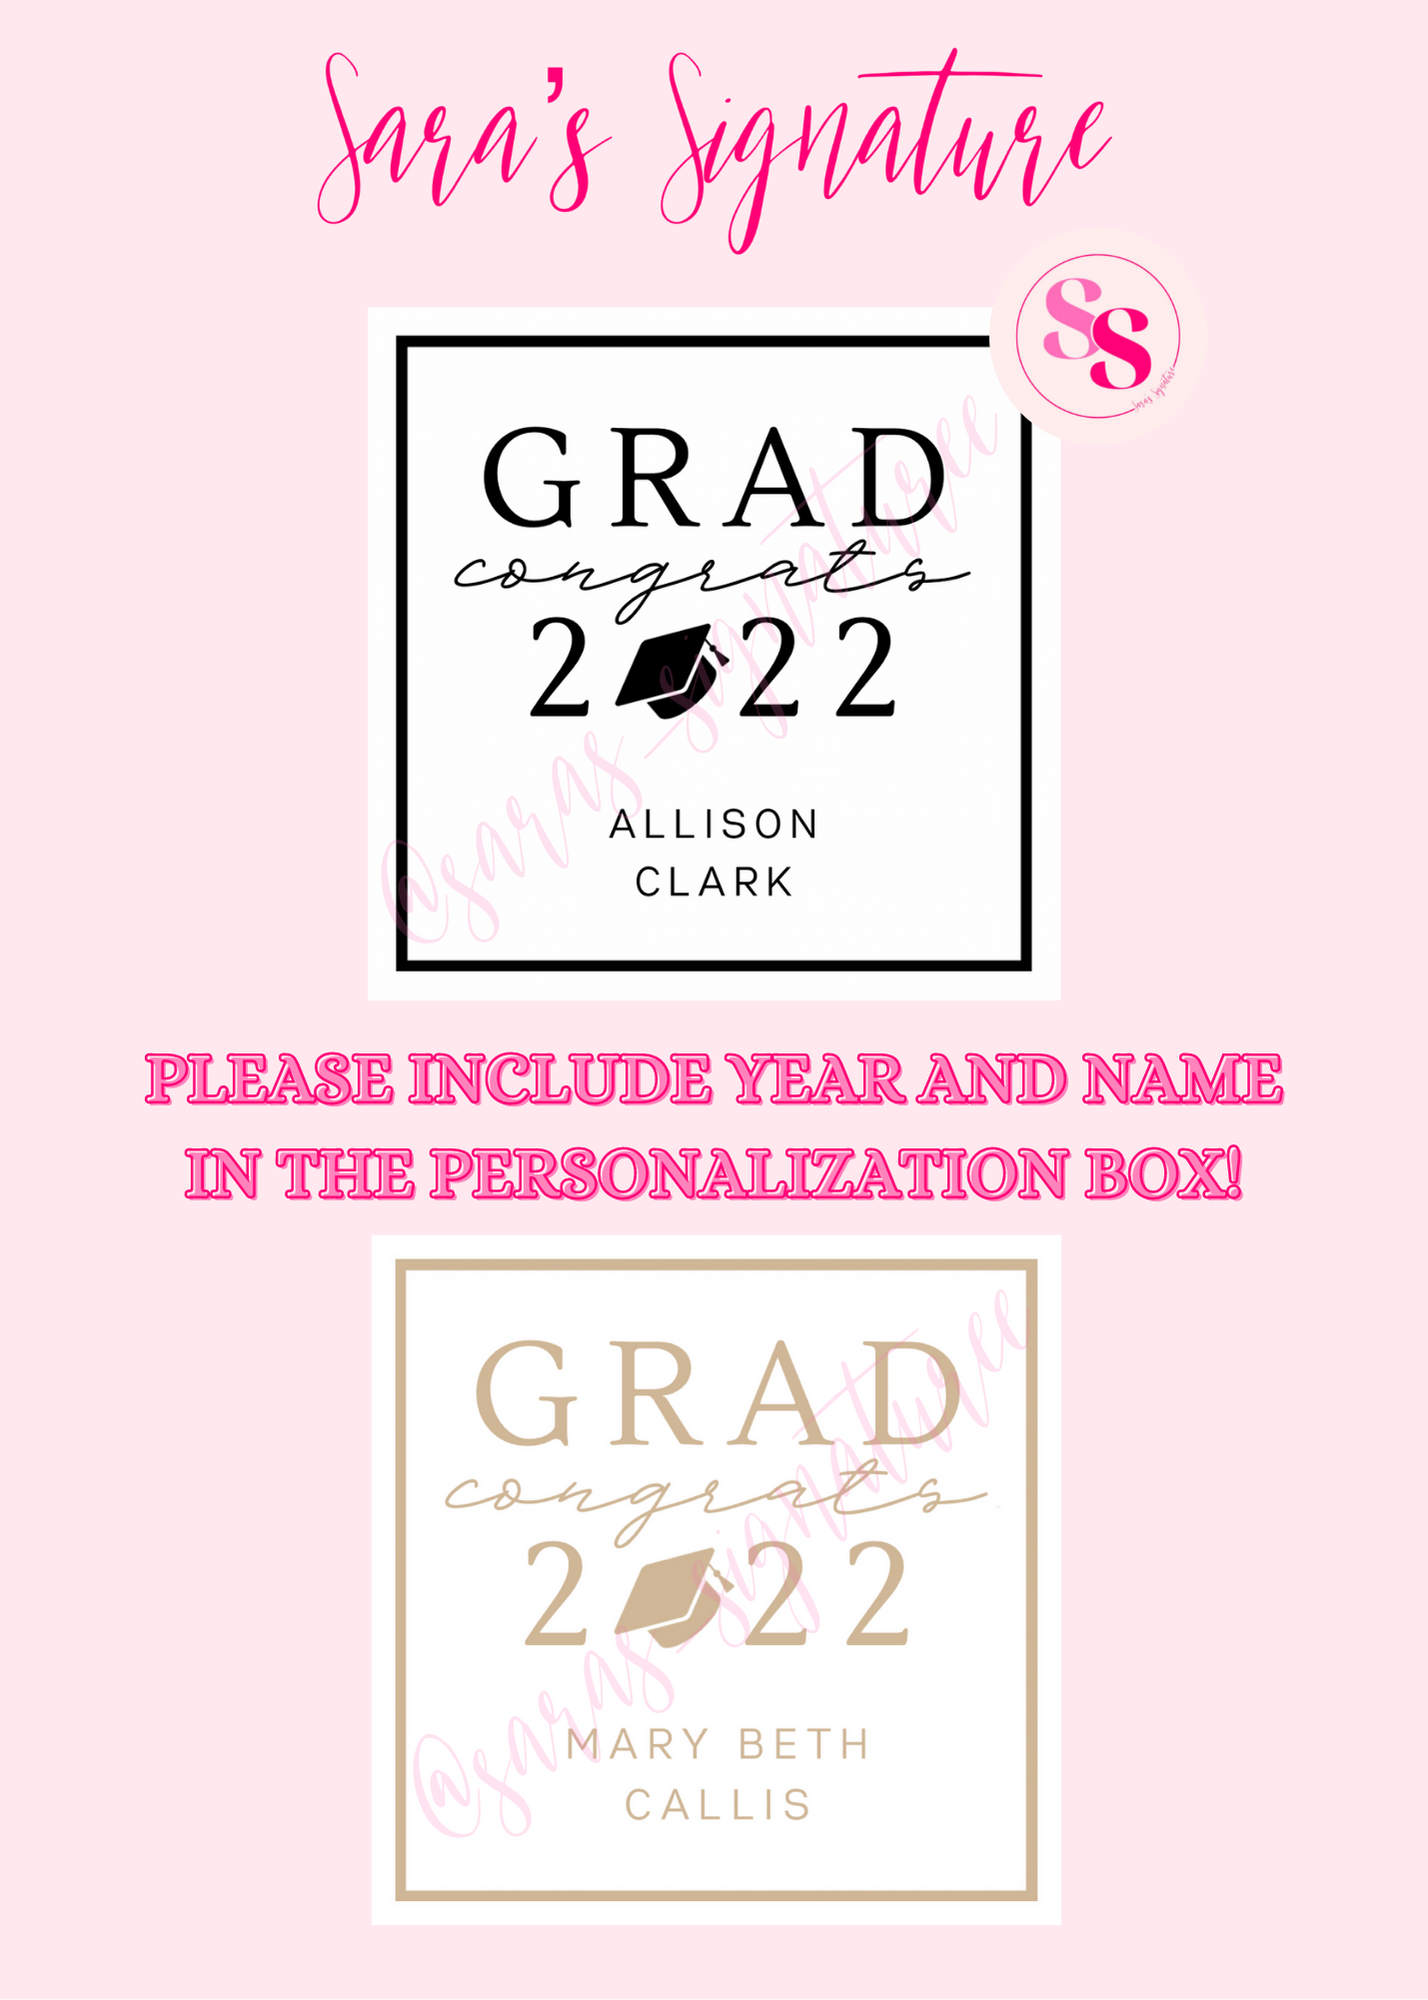 Graduation gift] Customized Mini champagne for classmate engraving souvenir  engraving gift graduation gift - Shop dyow520 Wine, Beer & Spirits - Pinkoi